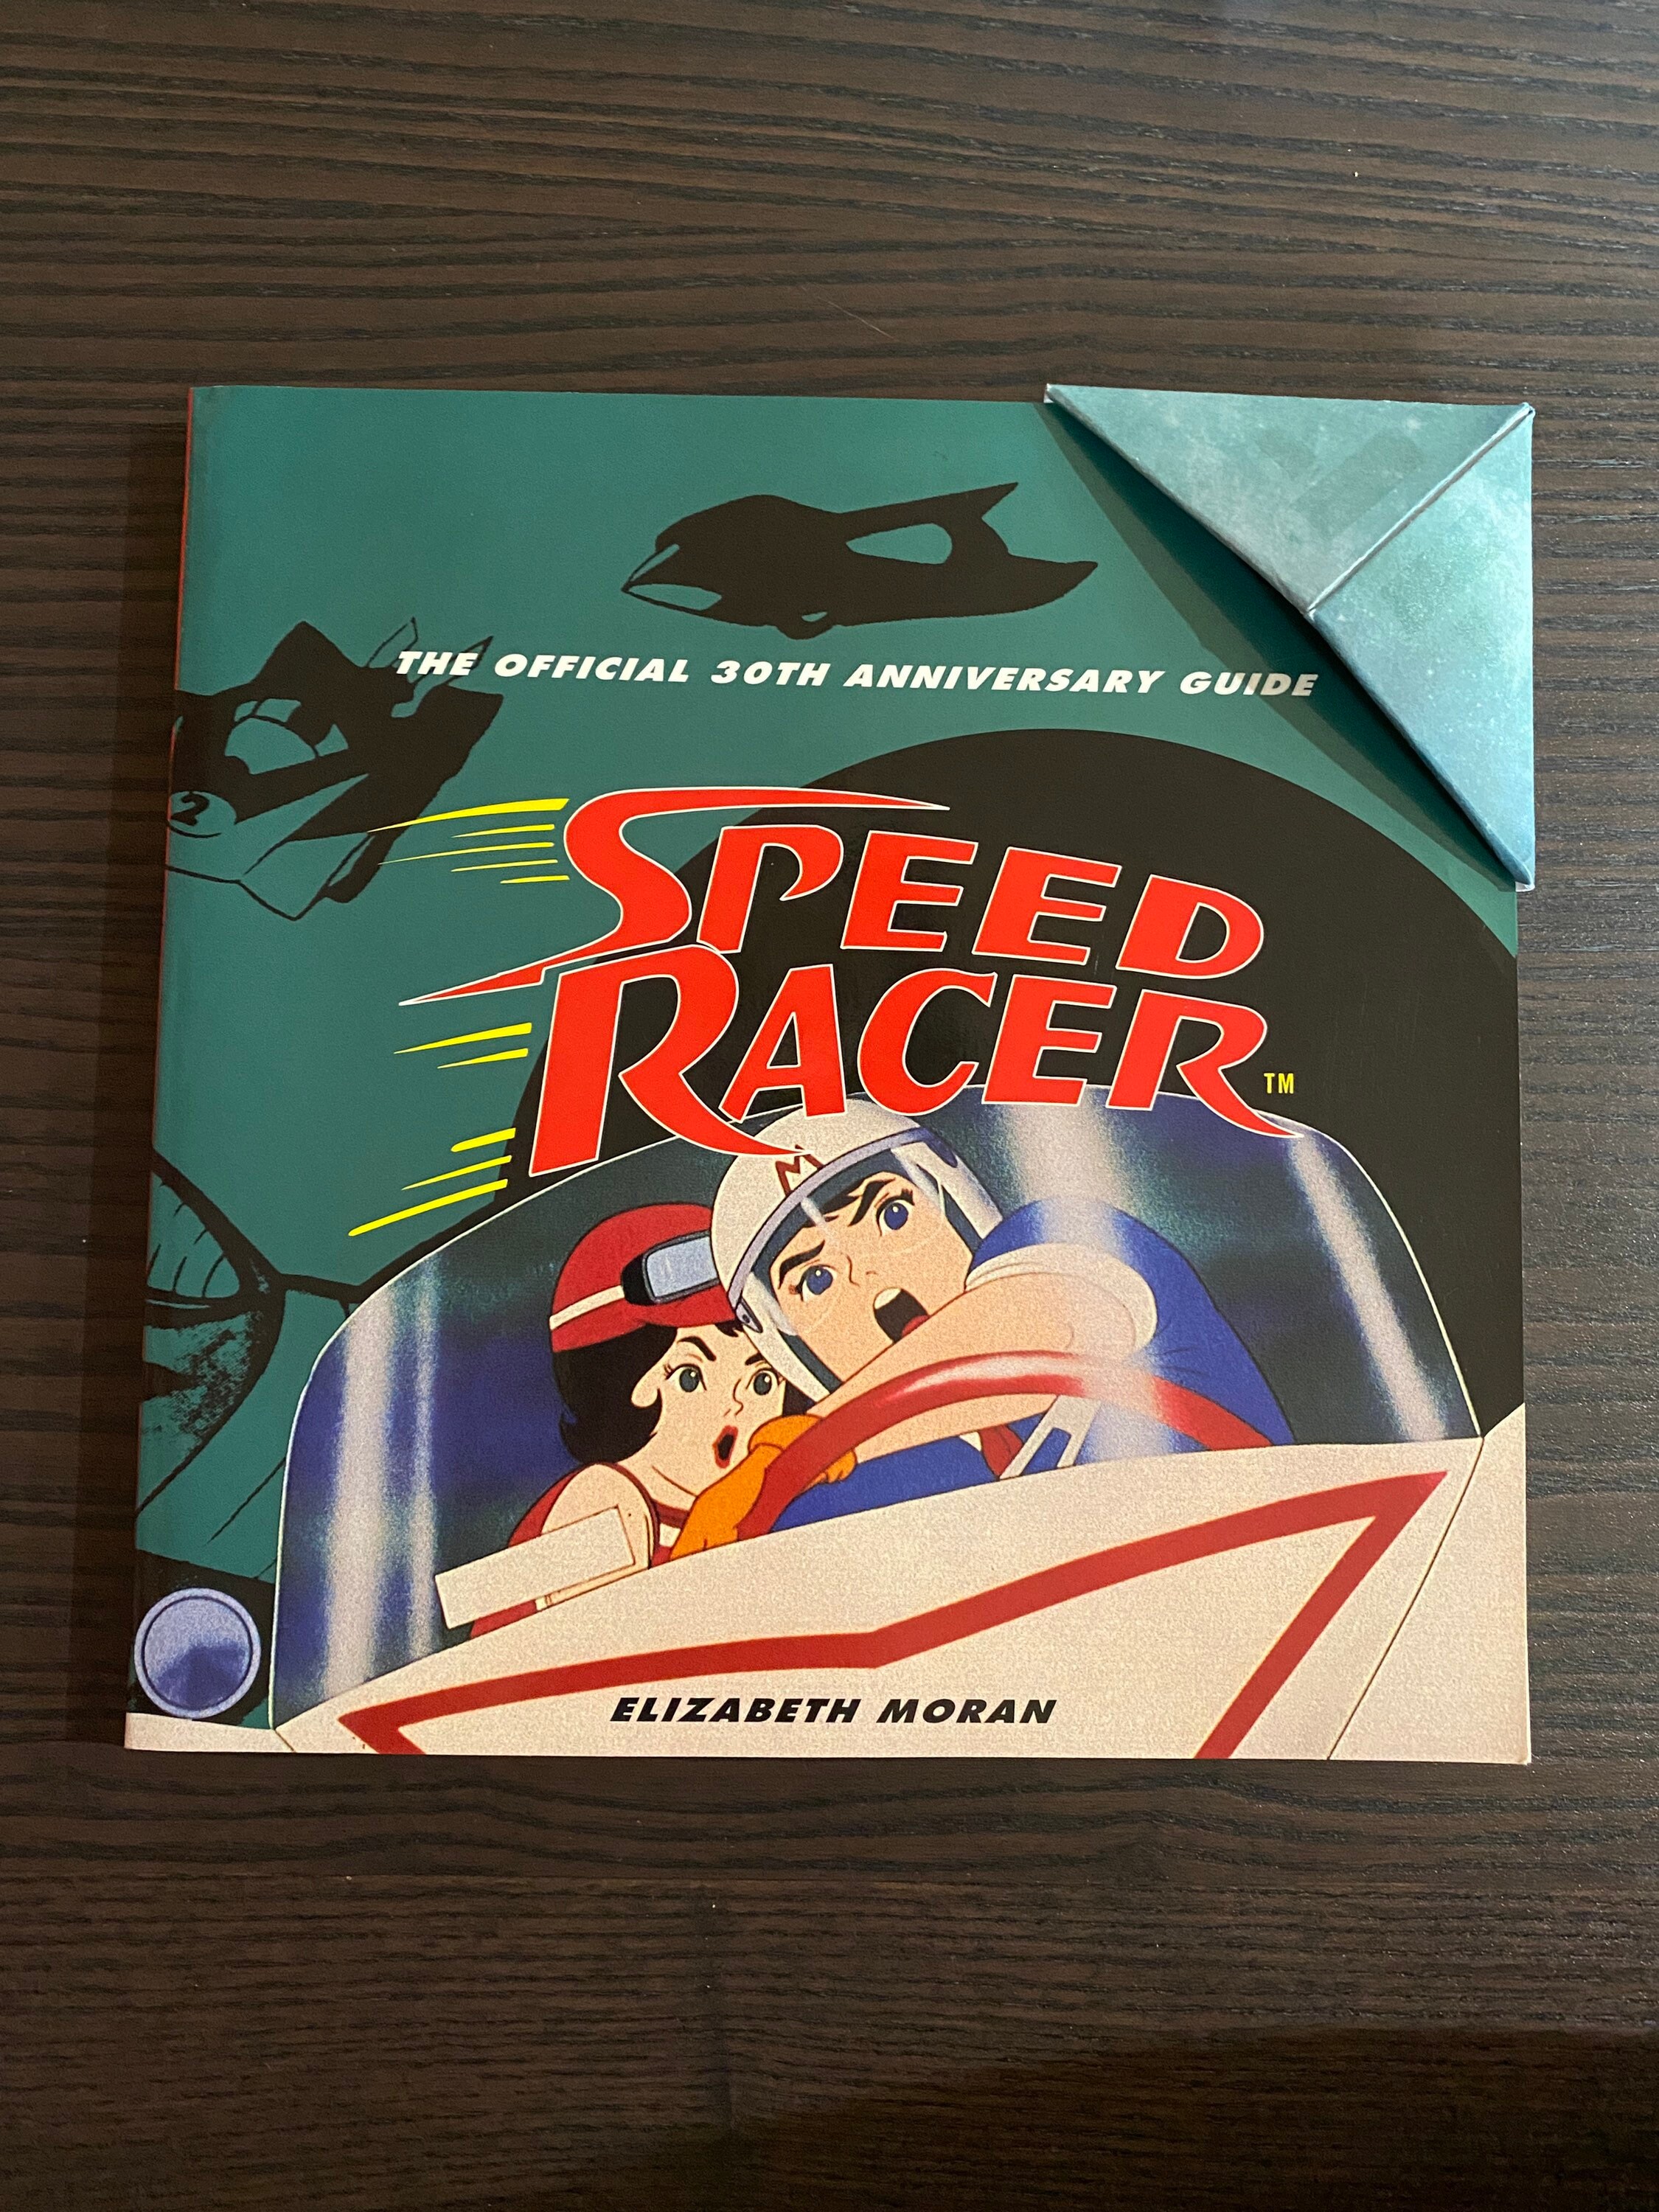 SPEED RACER MACH GO GO GO – Buds Art Books